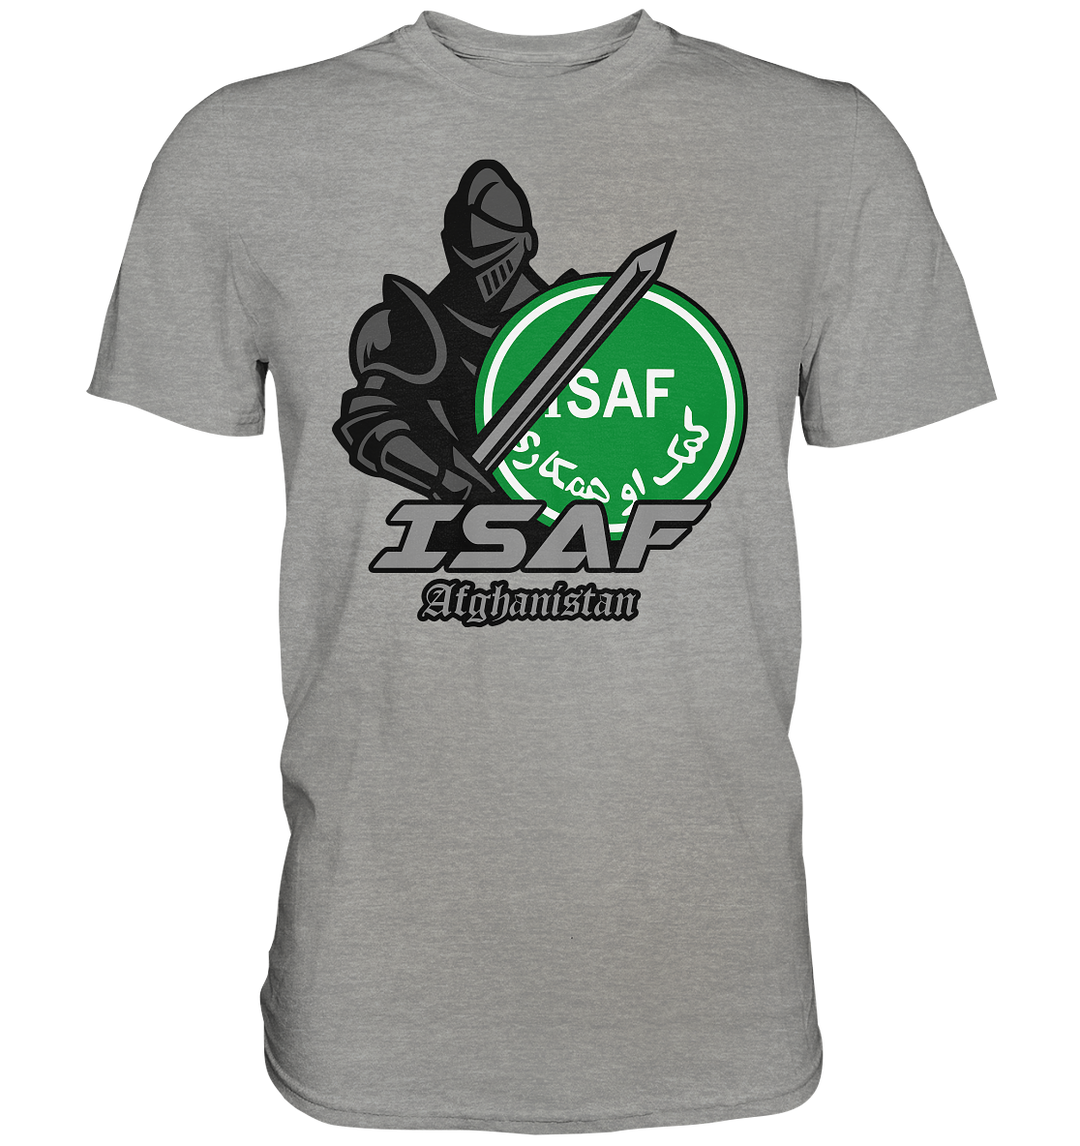 "ISAF Afghanistan - Ritter" - Premium Shirt